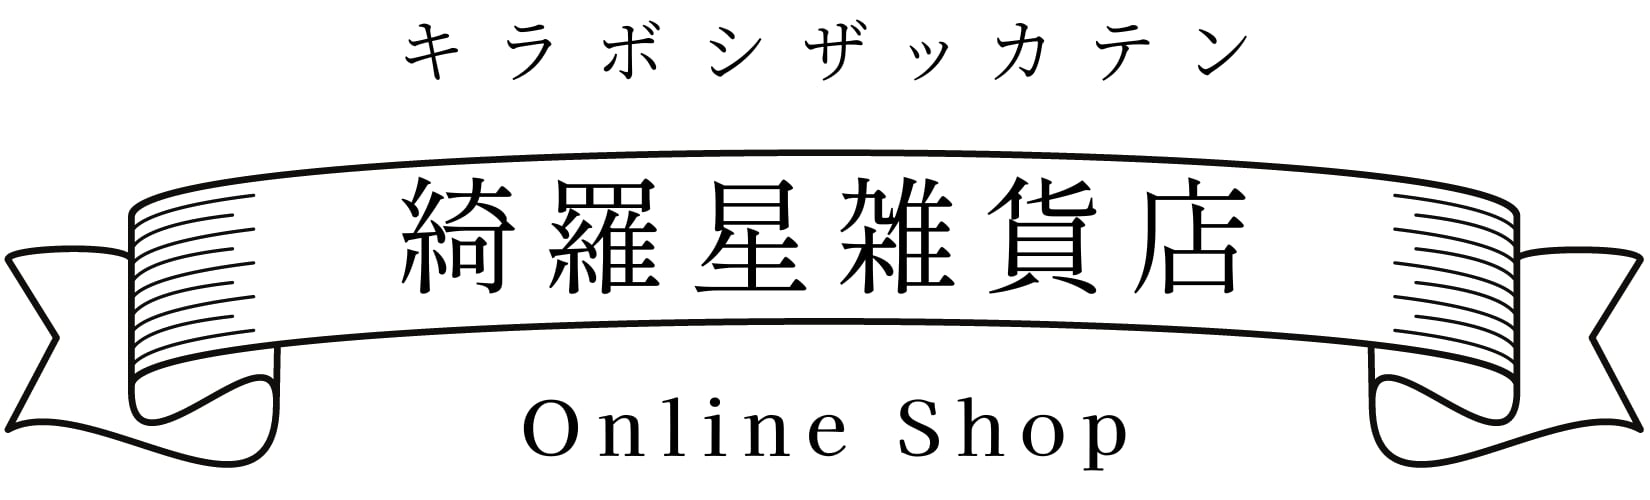 綺羅星雑貨店Online Shop